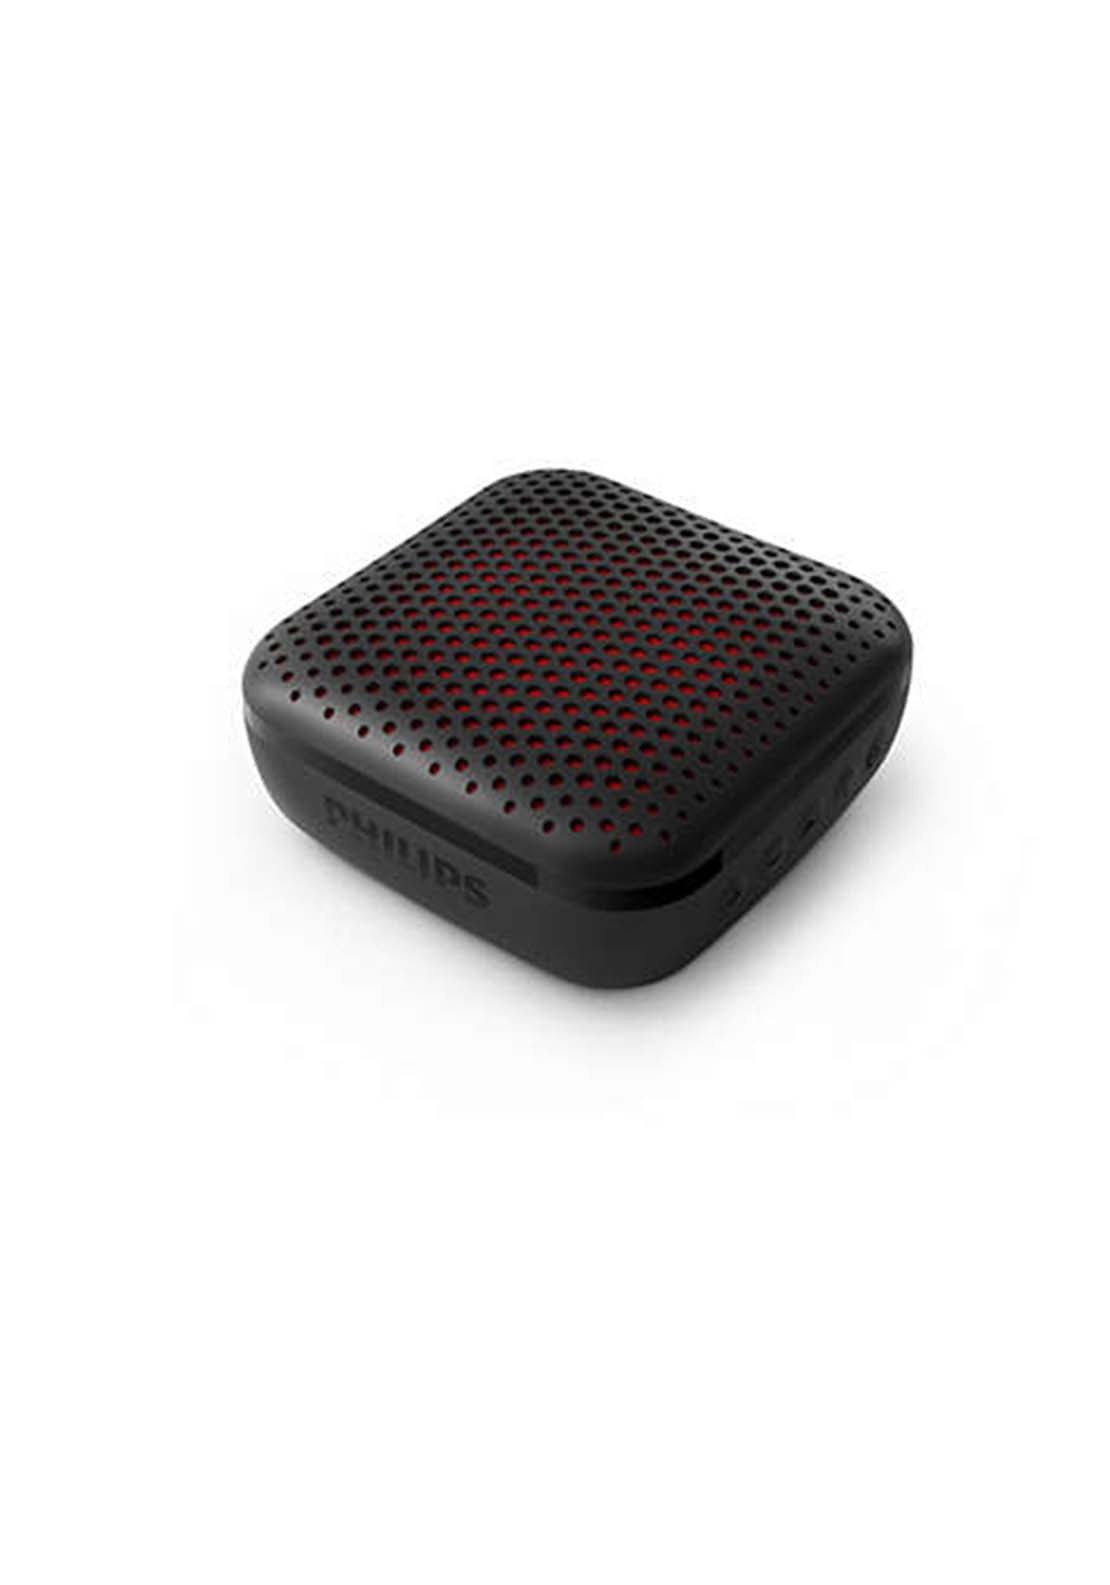 Philips Bluetooth Speaker | Tas2505B00 4 Shaws Department Stores